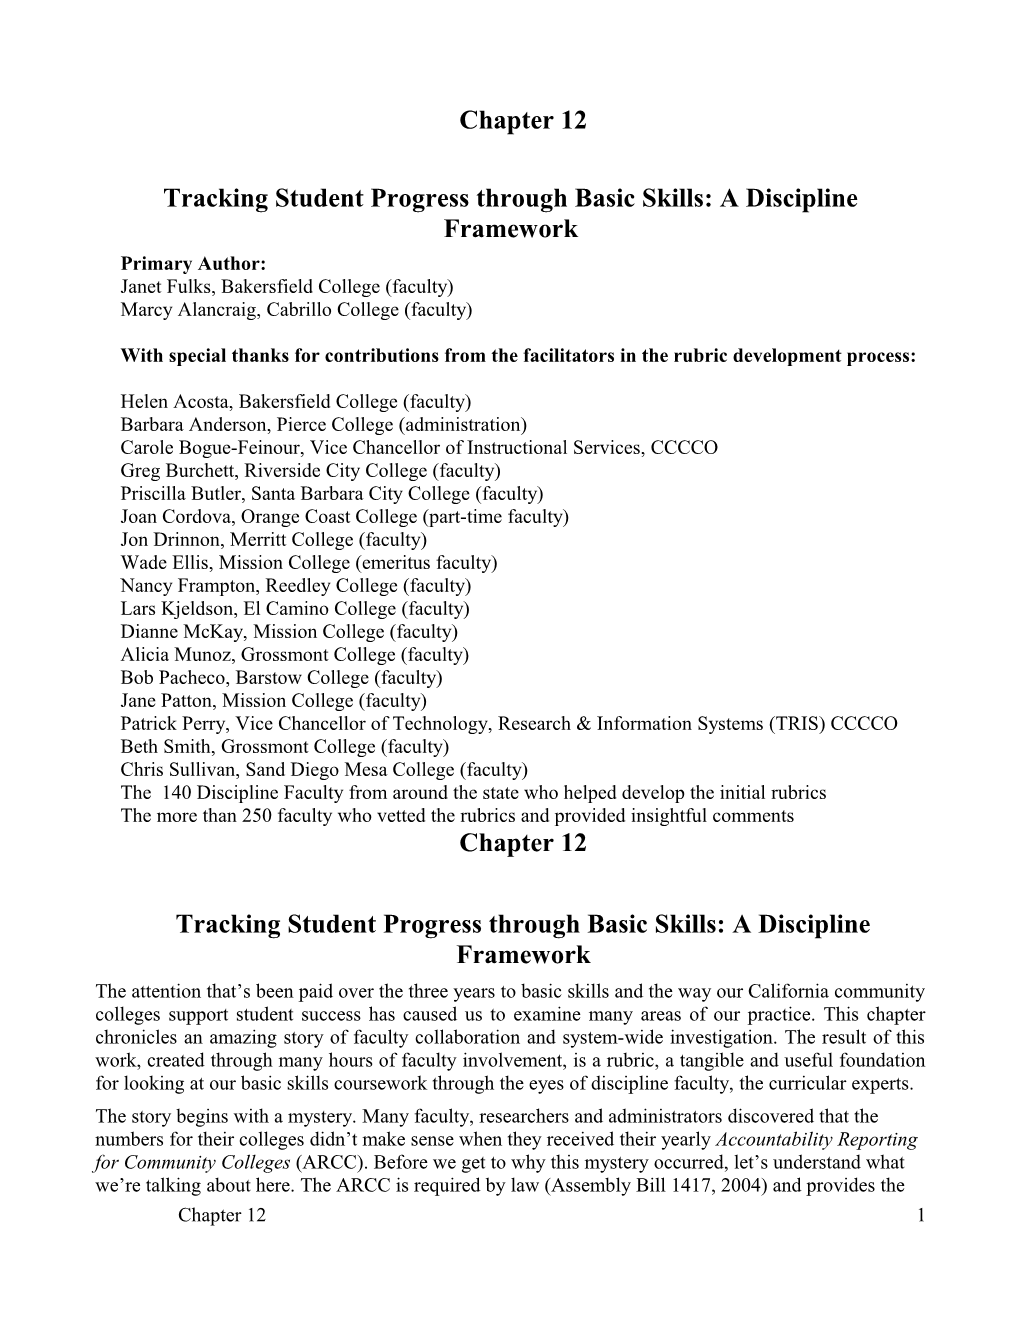 Tracking Student Progress Through Basic Skills: a Discipline Framework